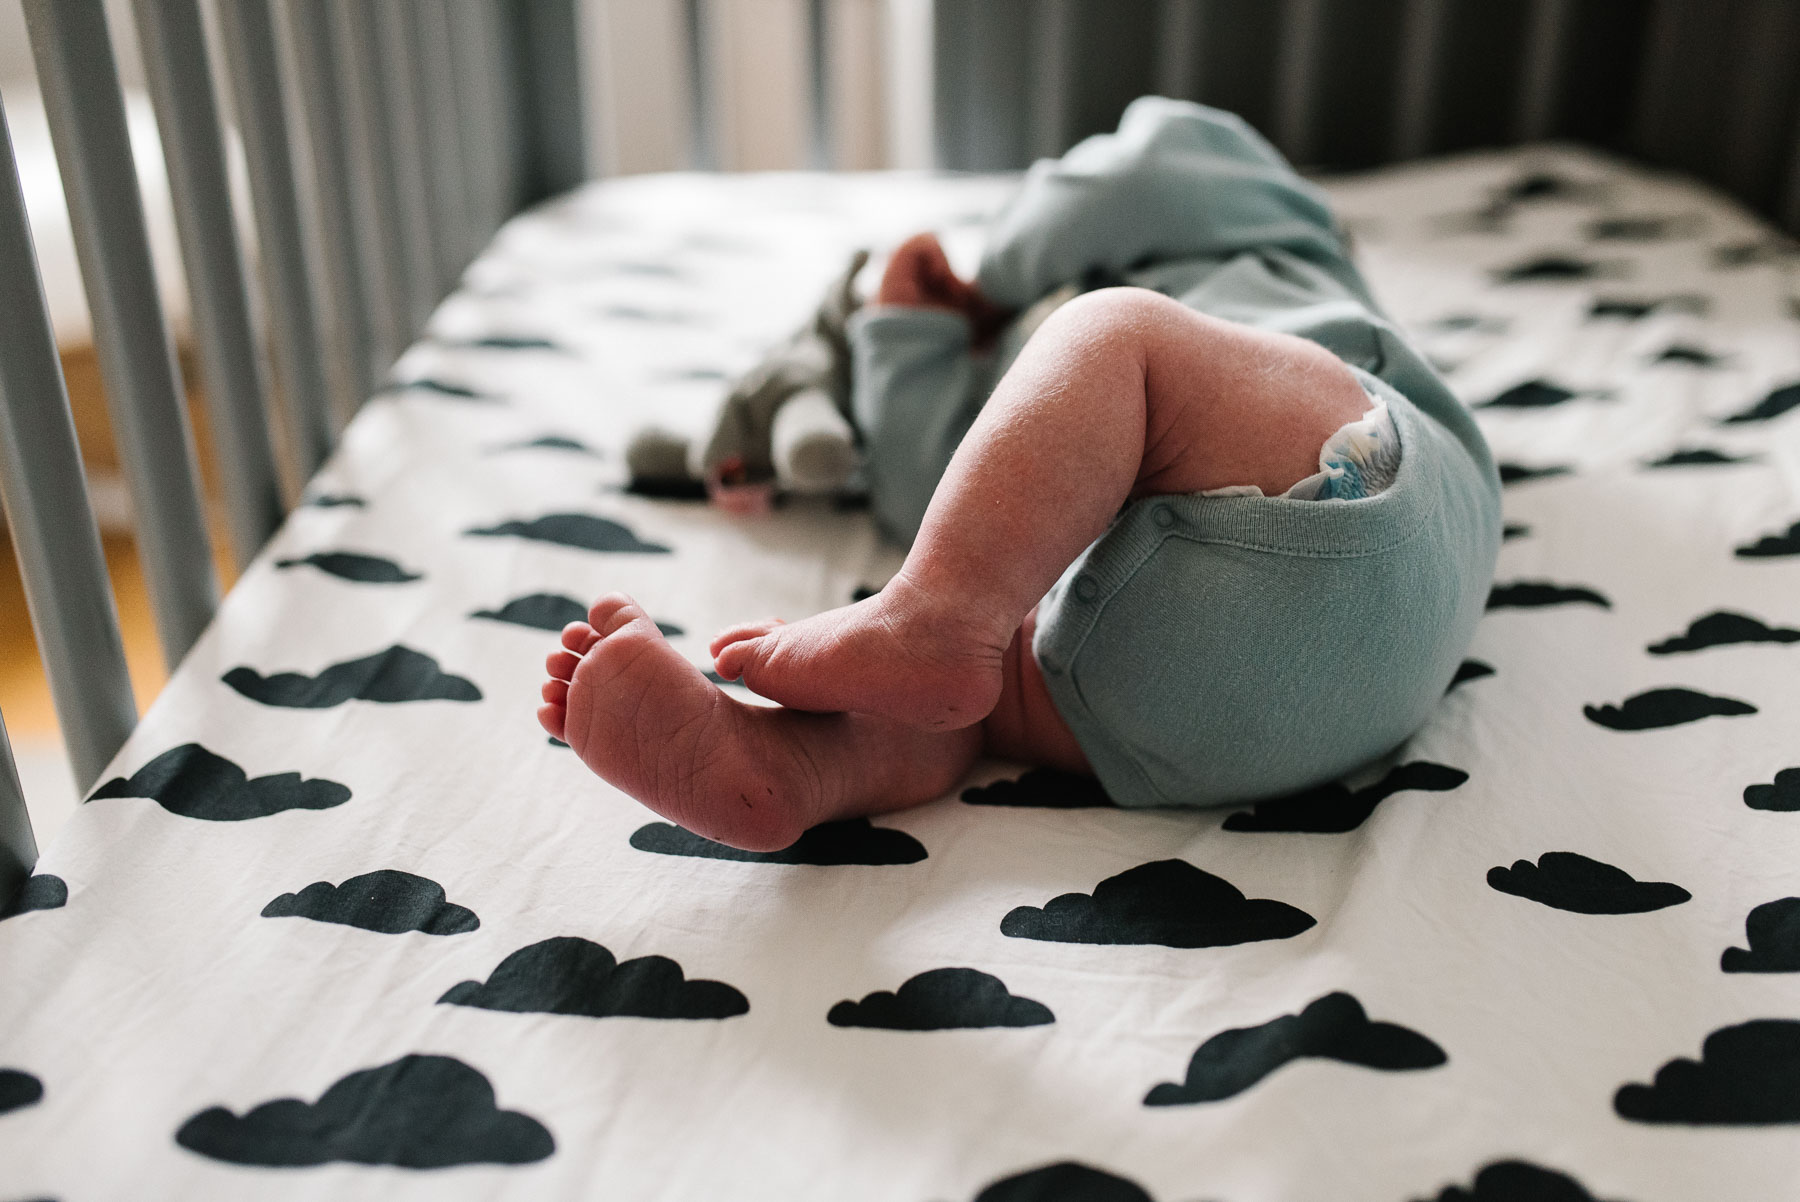 newborn baby thighs and feet in crib